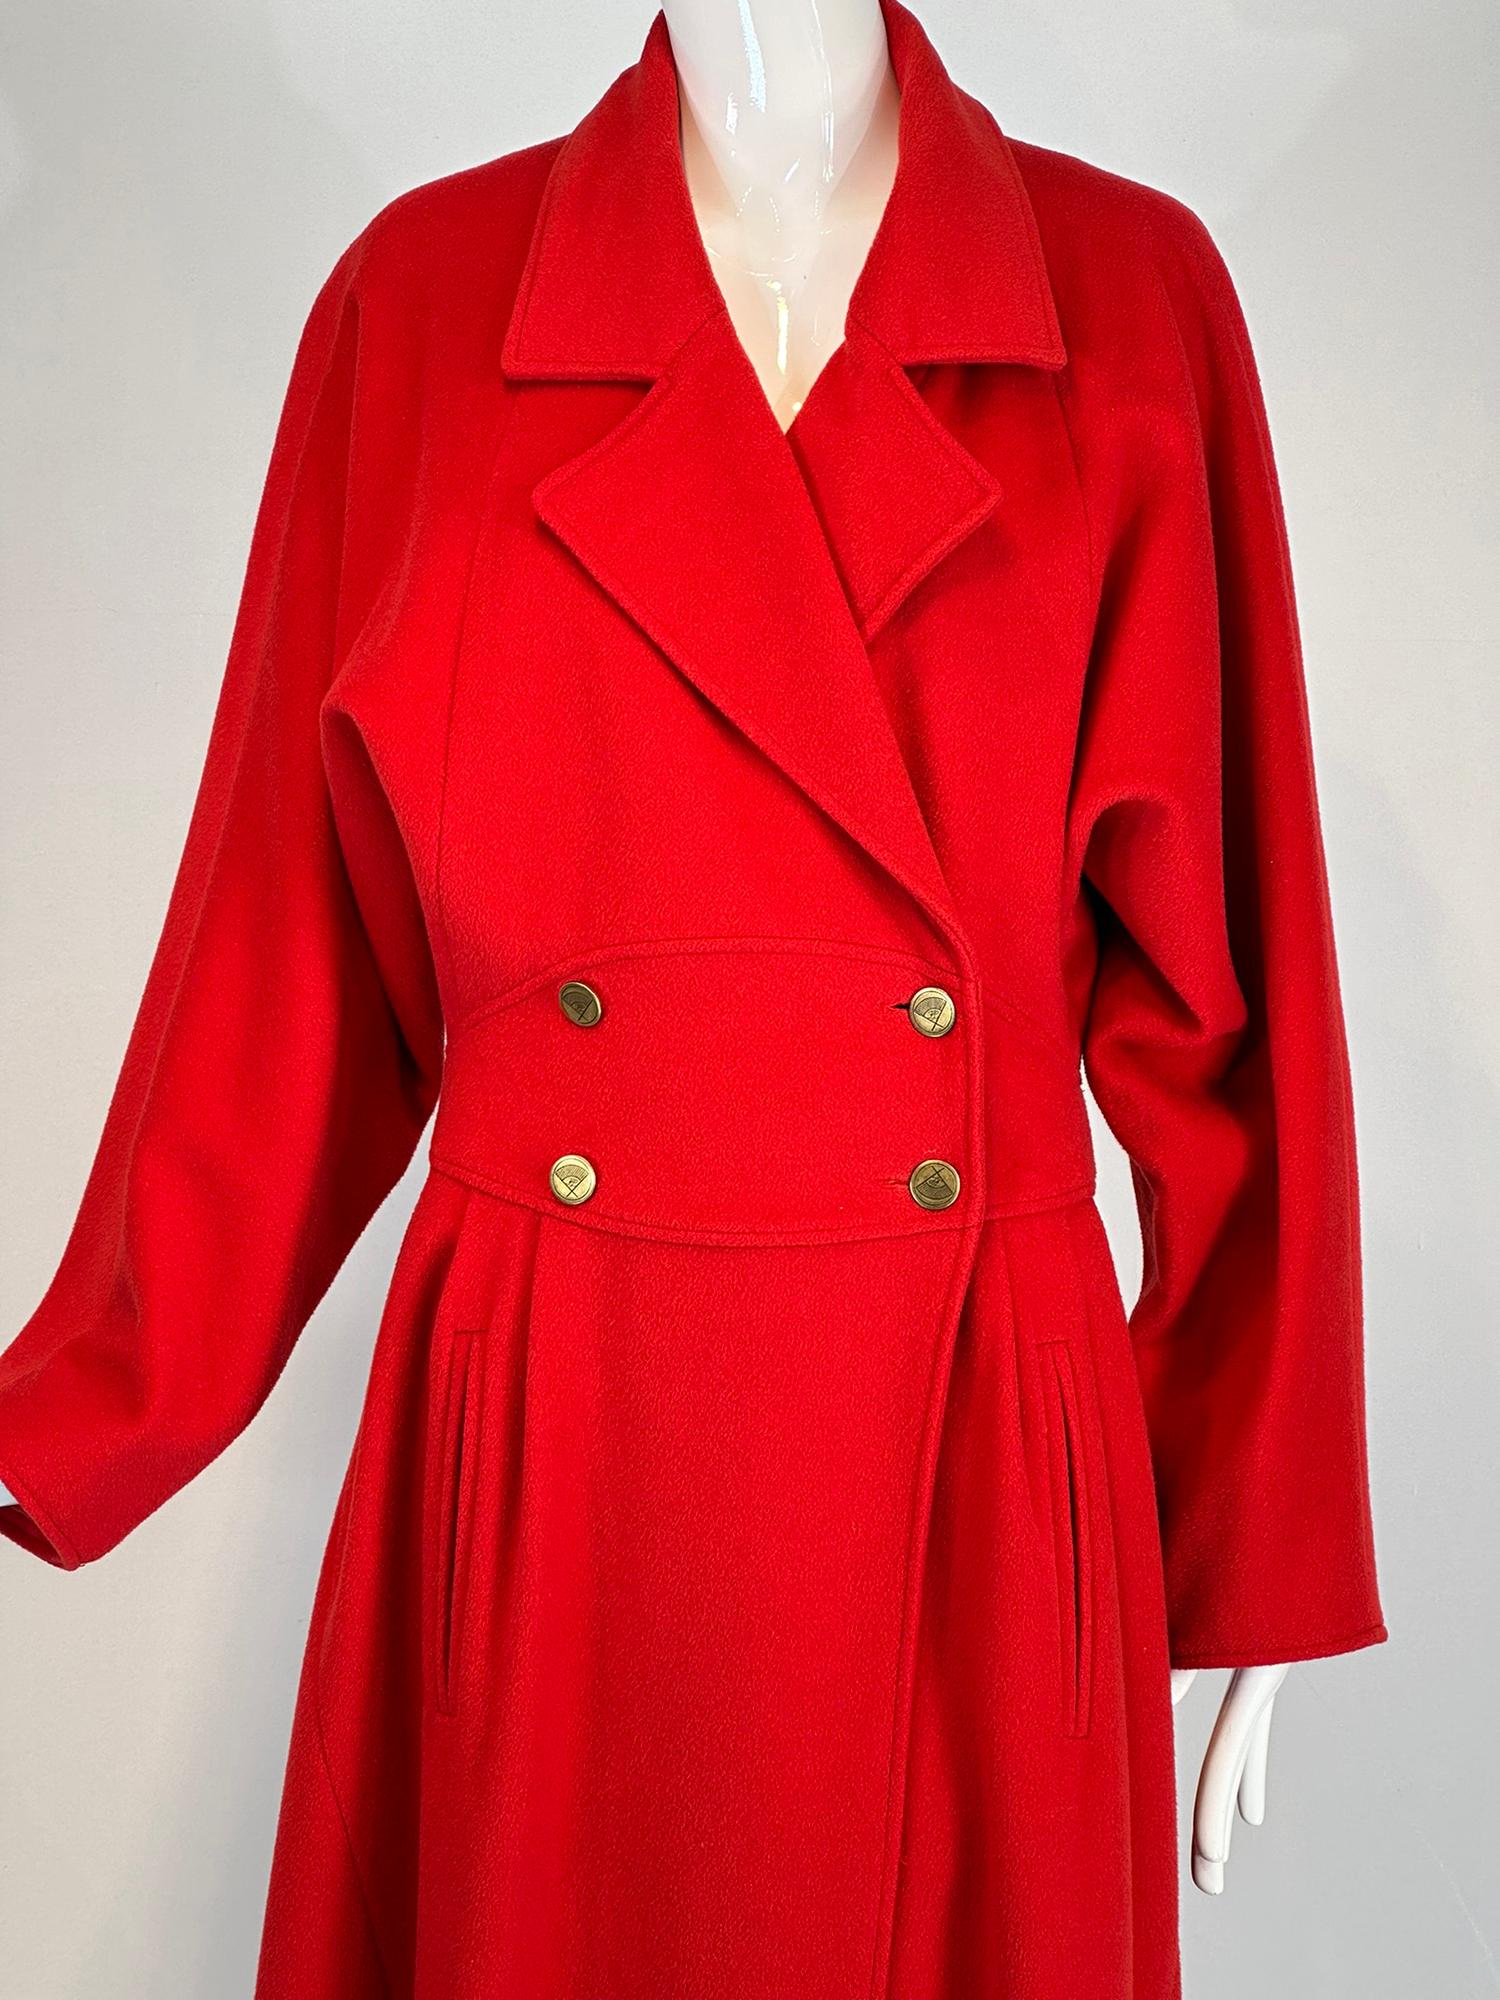 Karl Lagerfeld Dramatic Red Wool Dolman Sleeve Semi Full Skirt Coat 10 1980s For Sale 8